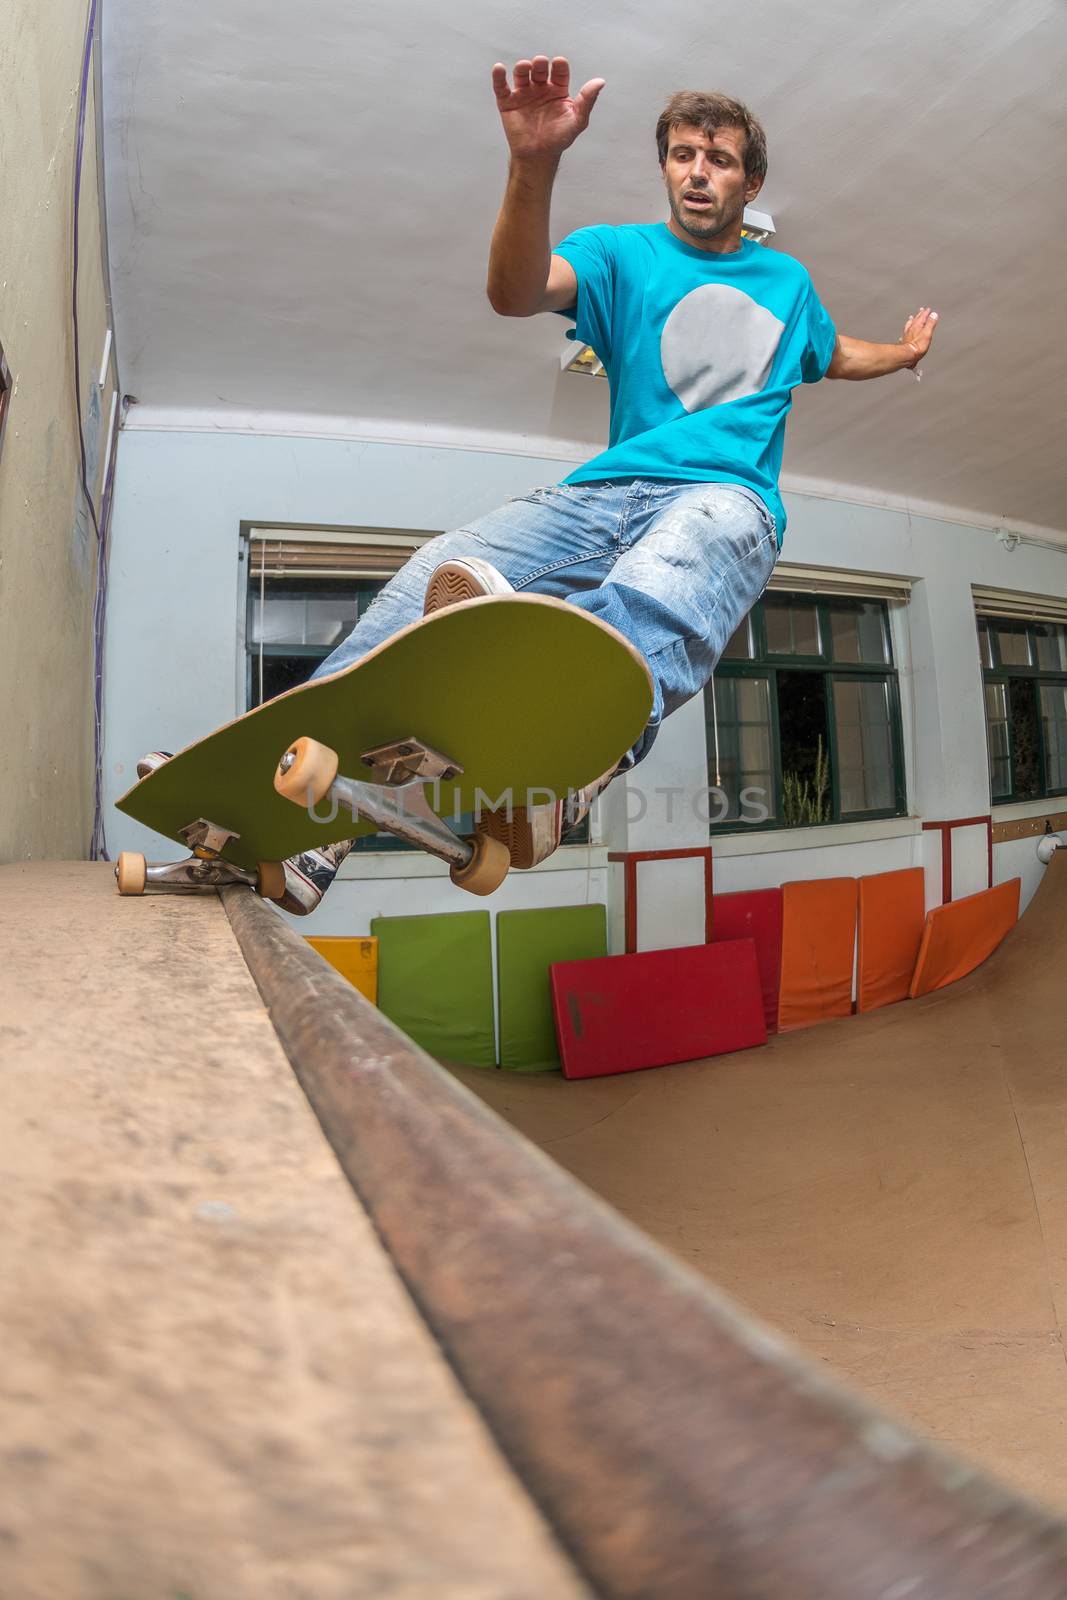 Skateboarder performing a pivot grind by homydesign